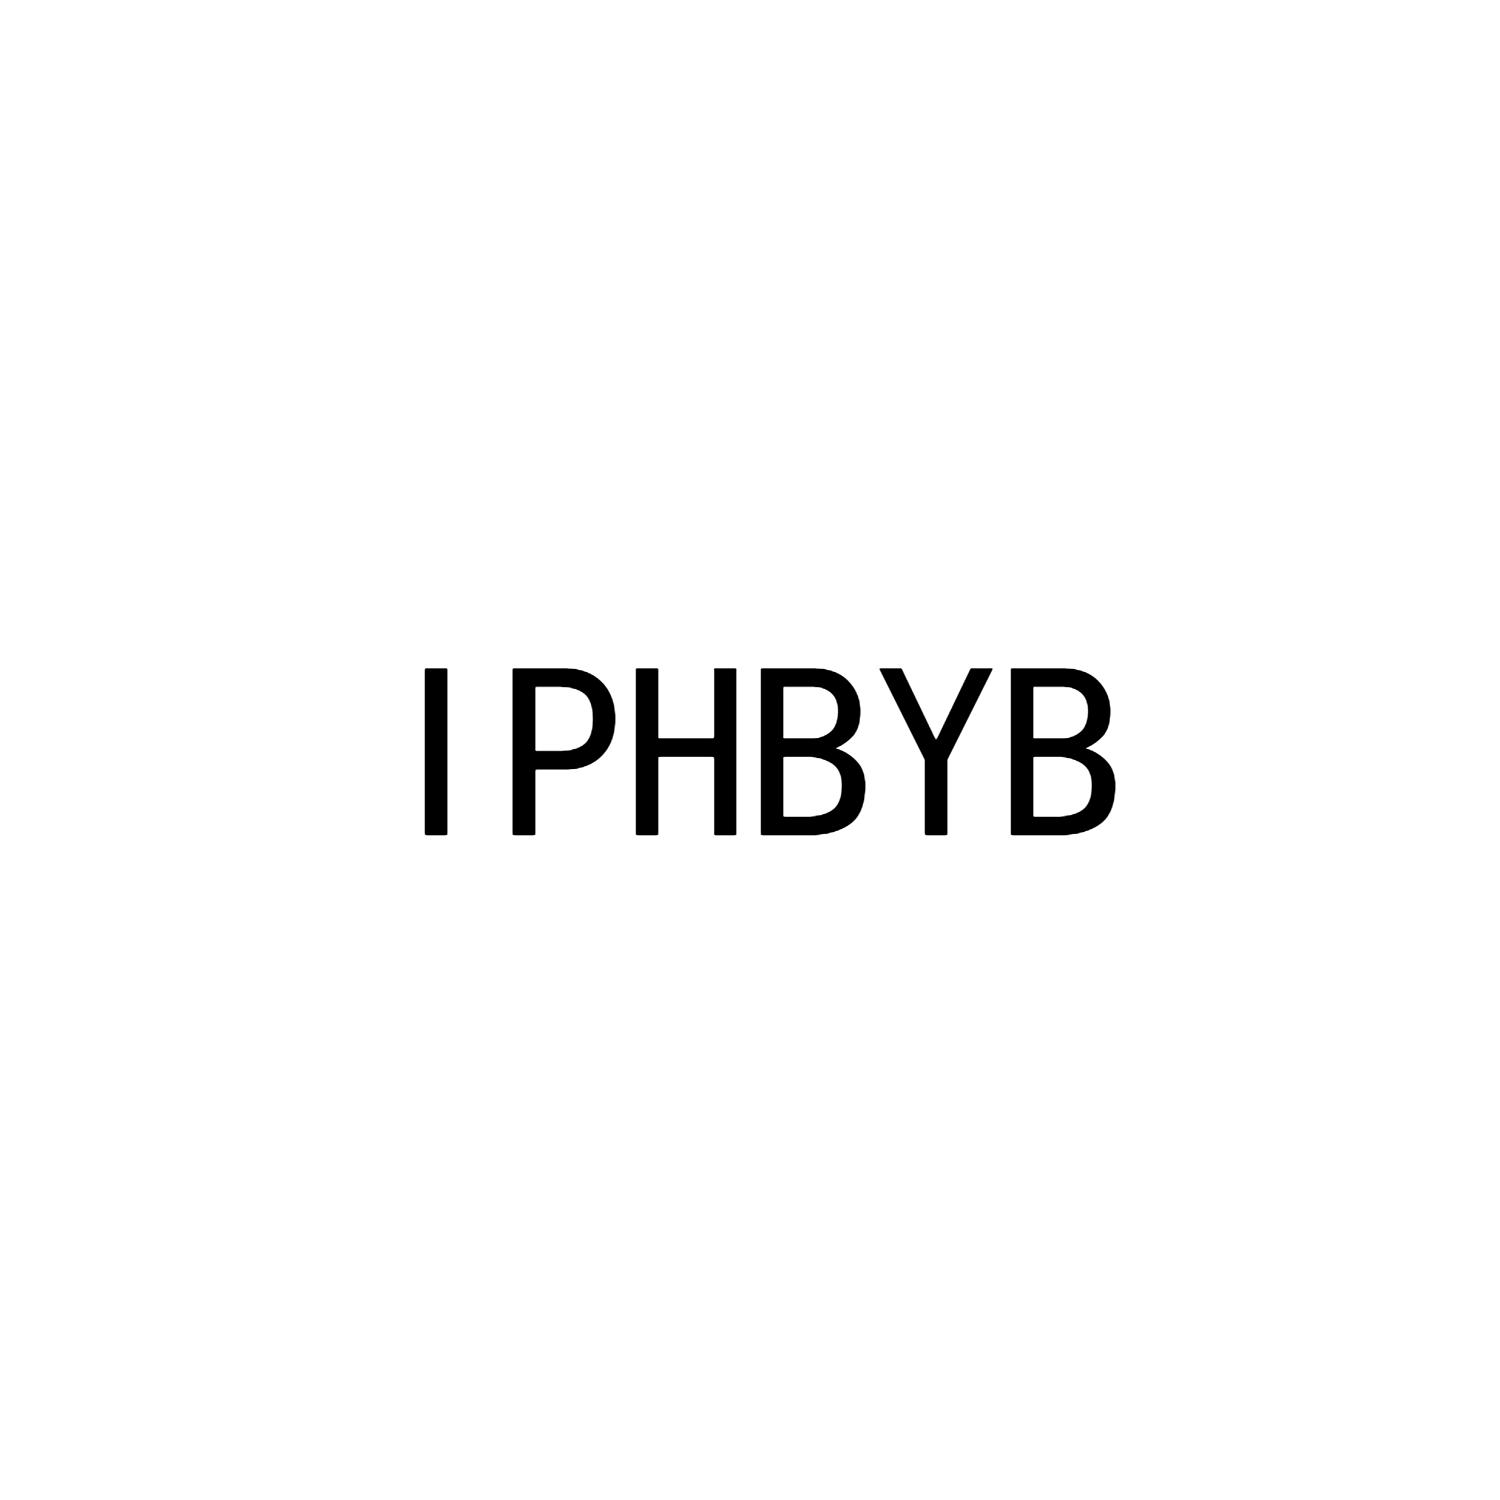 IPHBYB